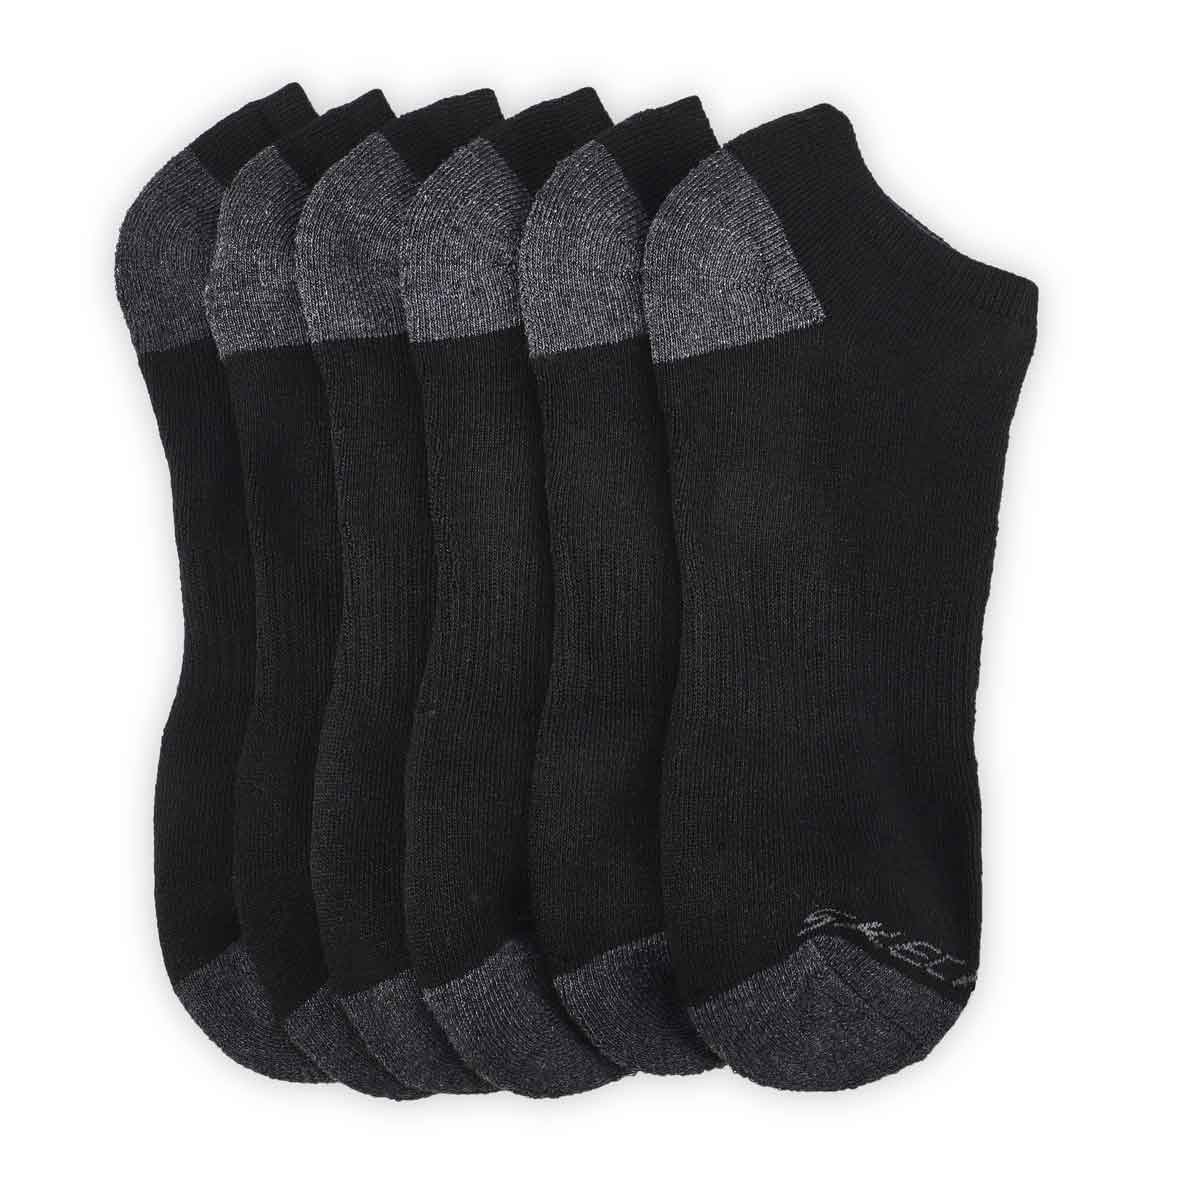 Men's FULL TERRY NO SHOW black multi socks - 6 pk